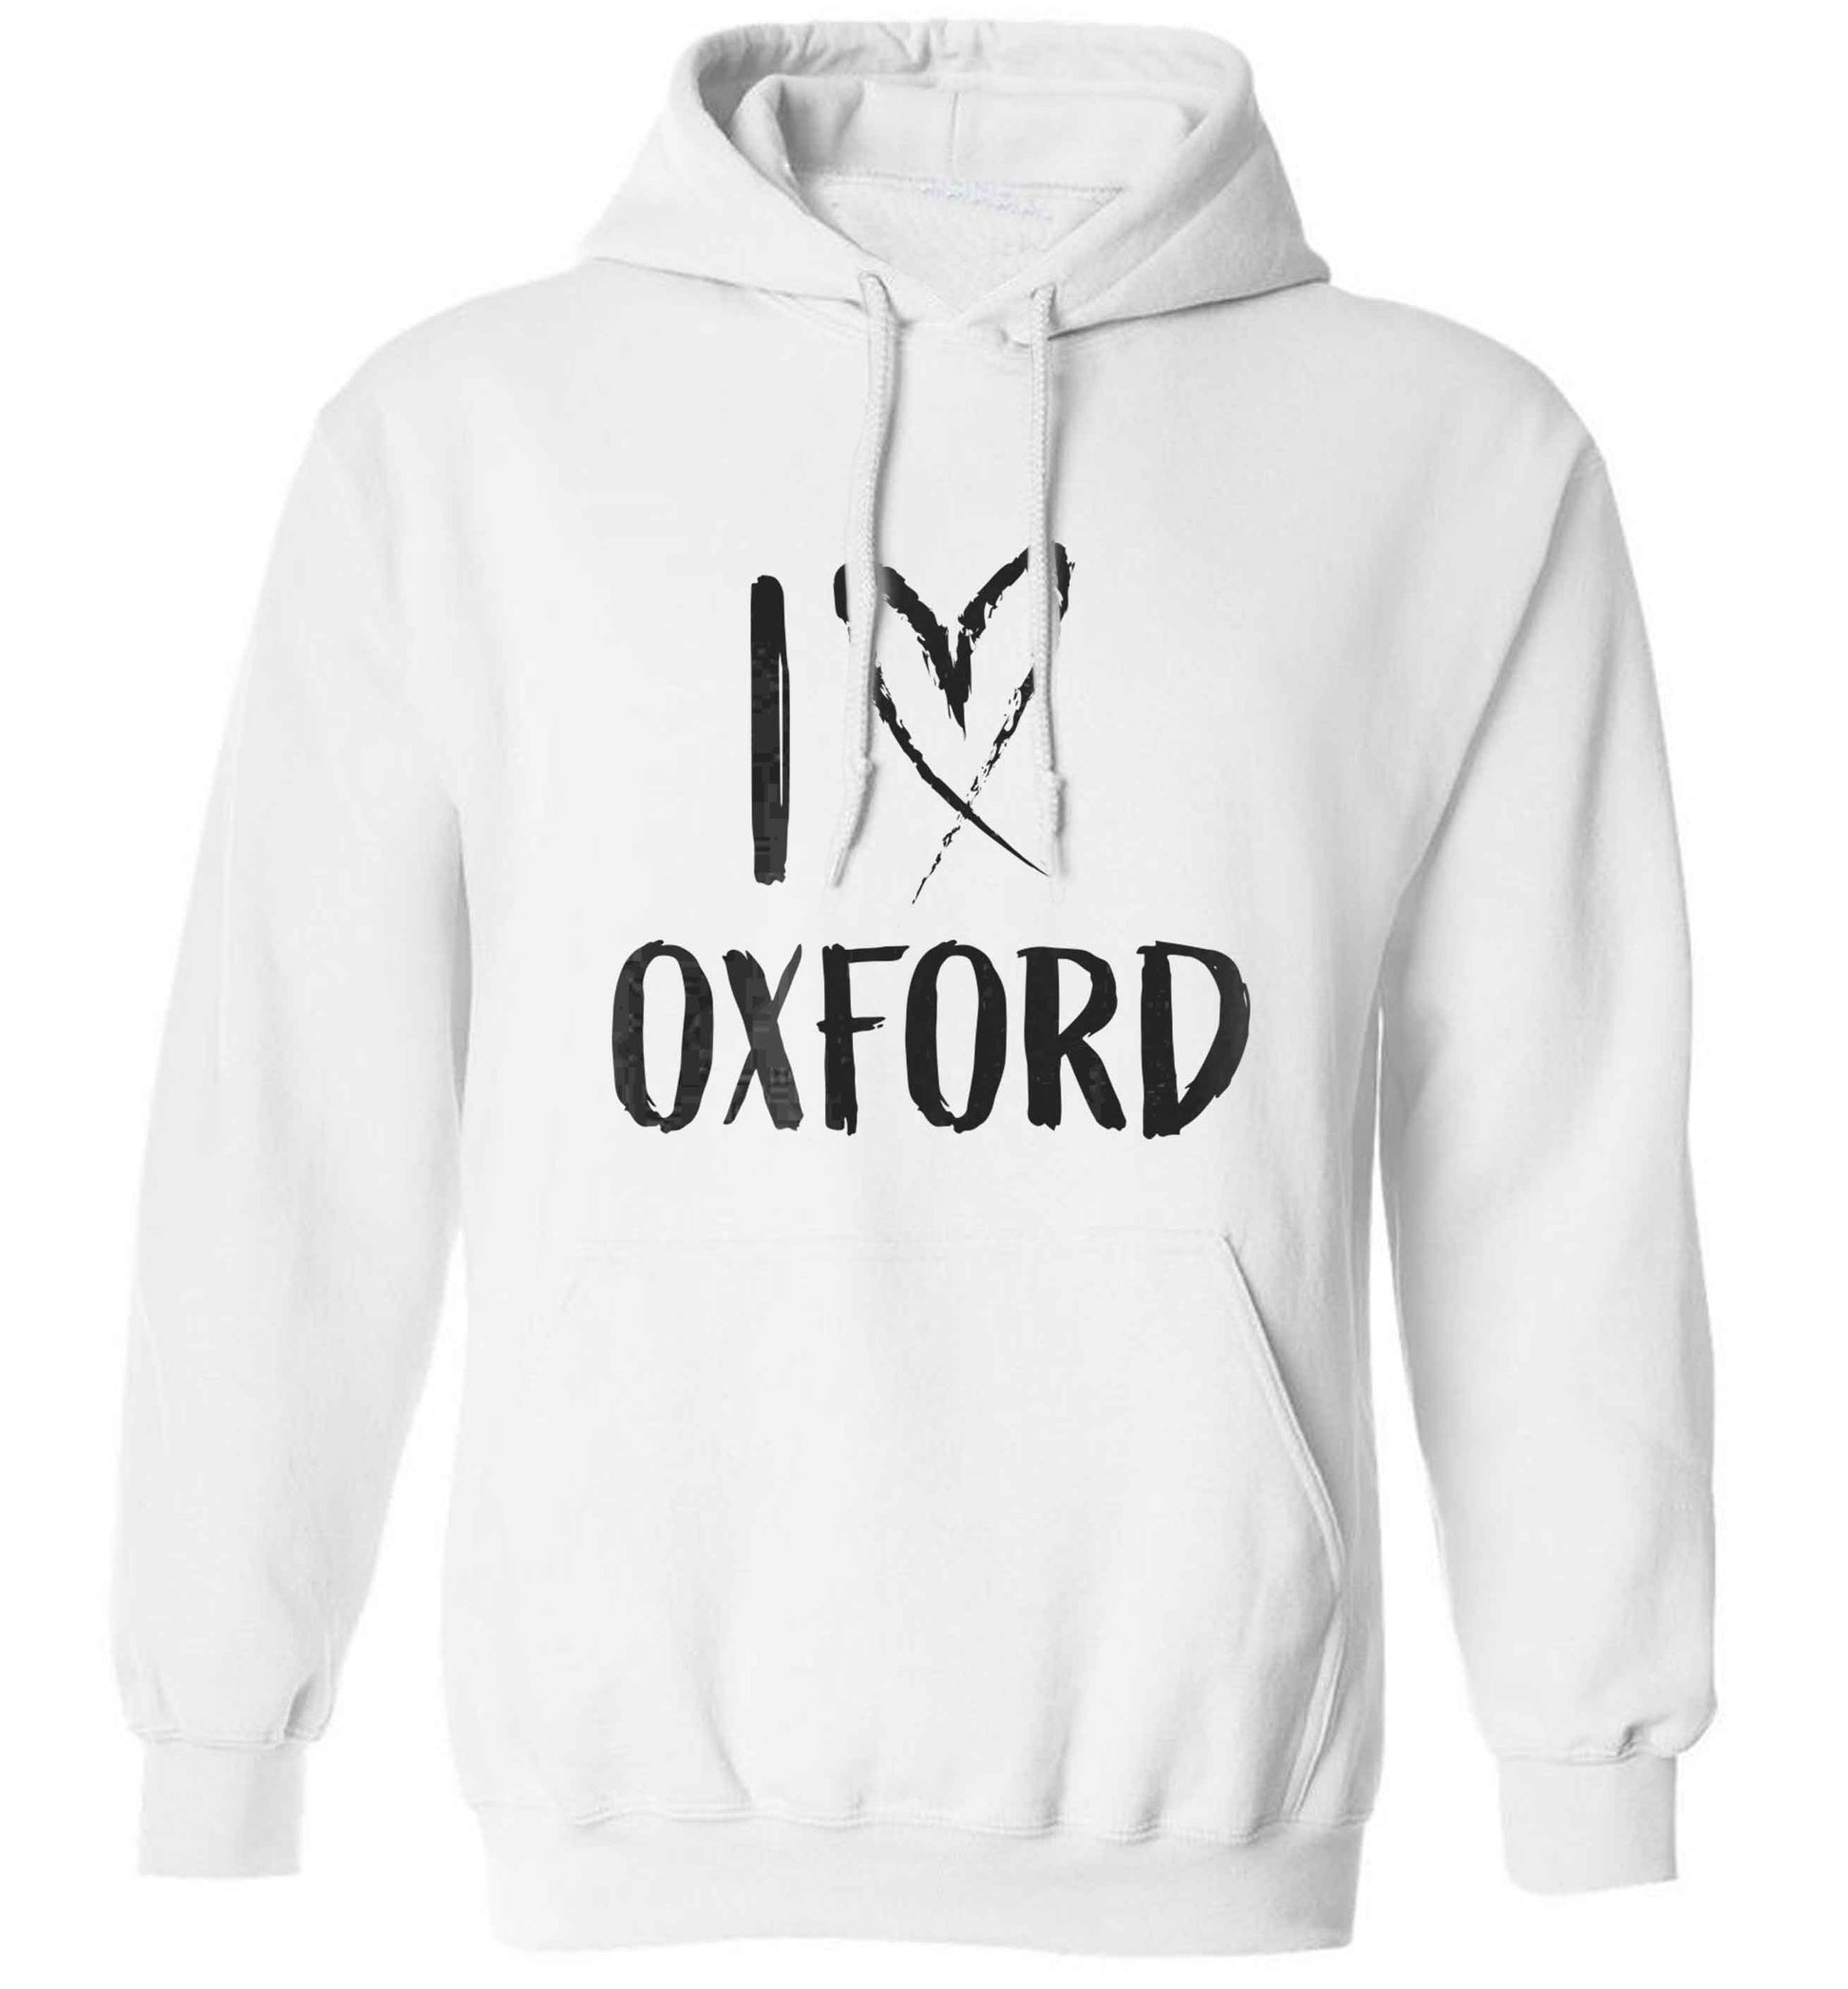 I love Oxford adults unisex white hoodie 2XL